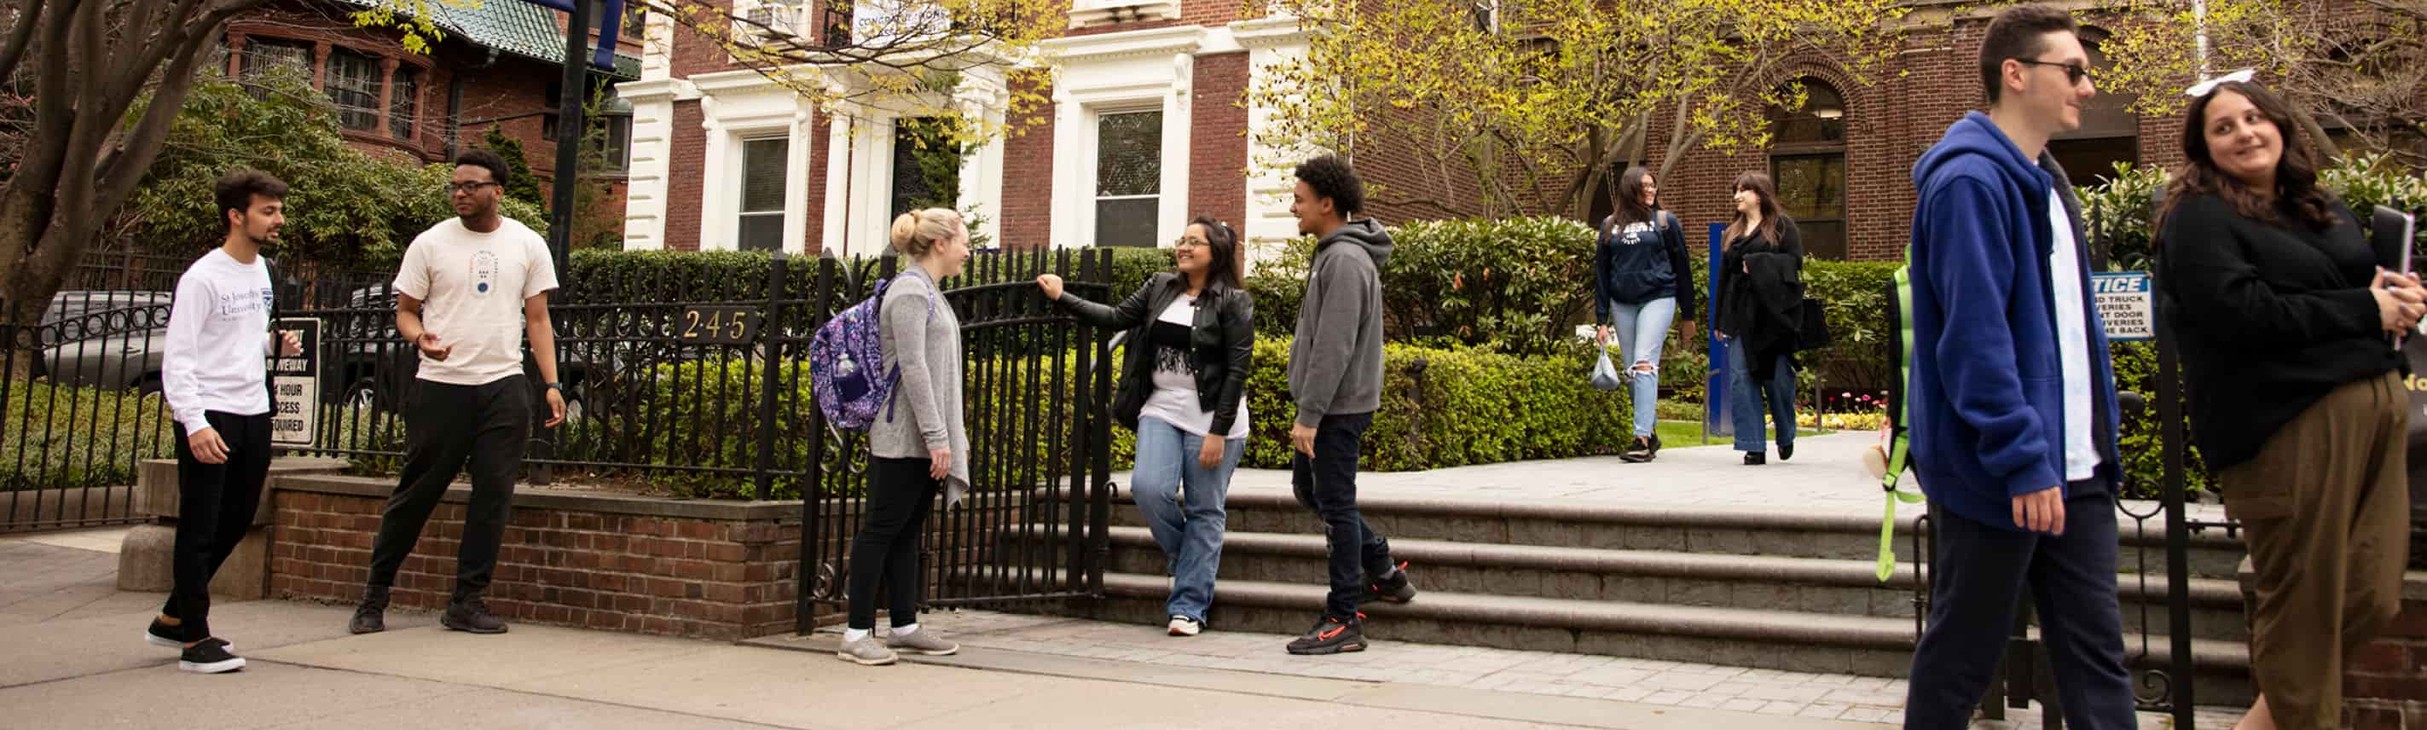 SJNY College Experience Program for High Schoolers